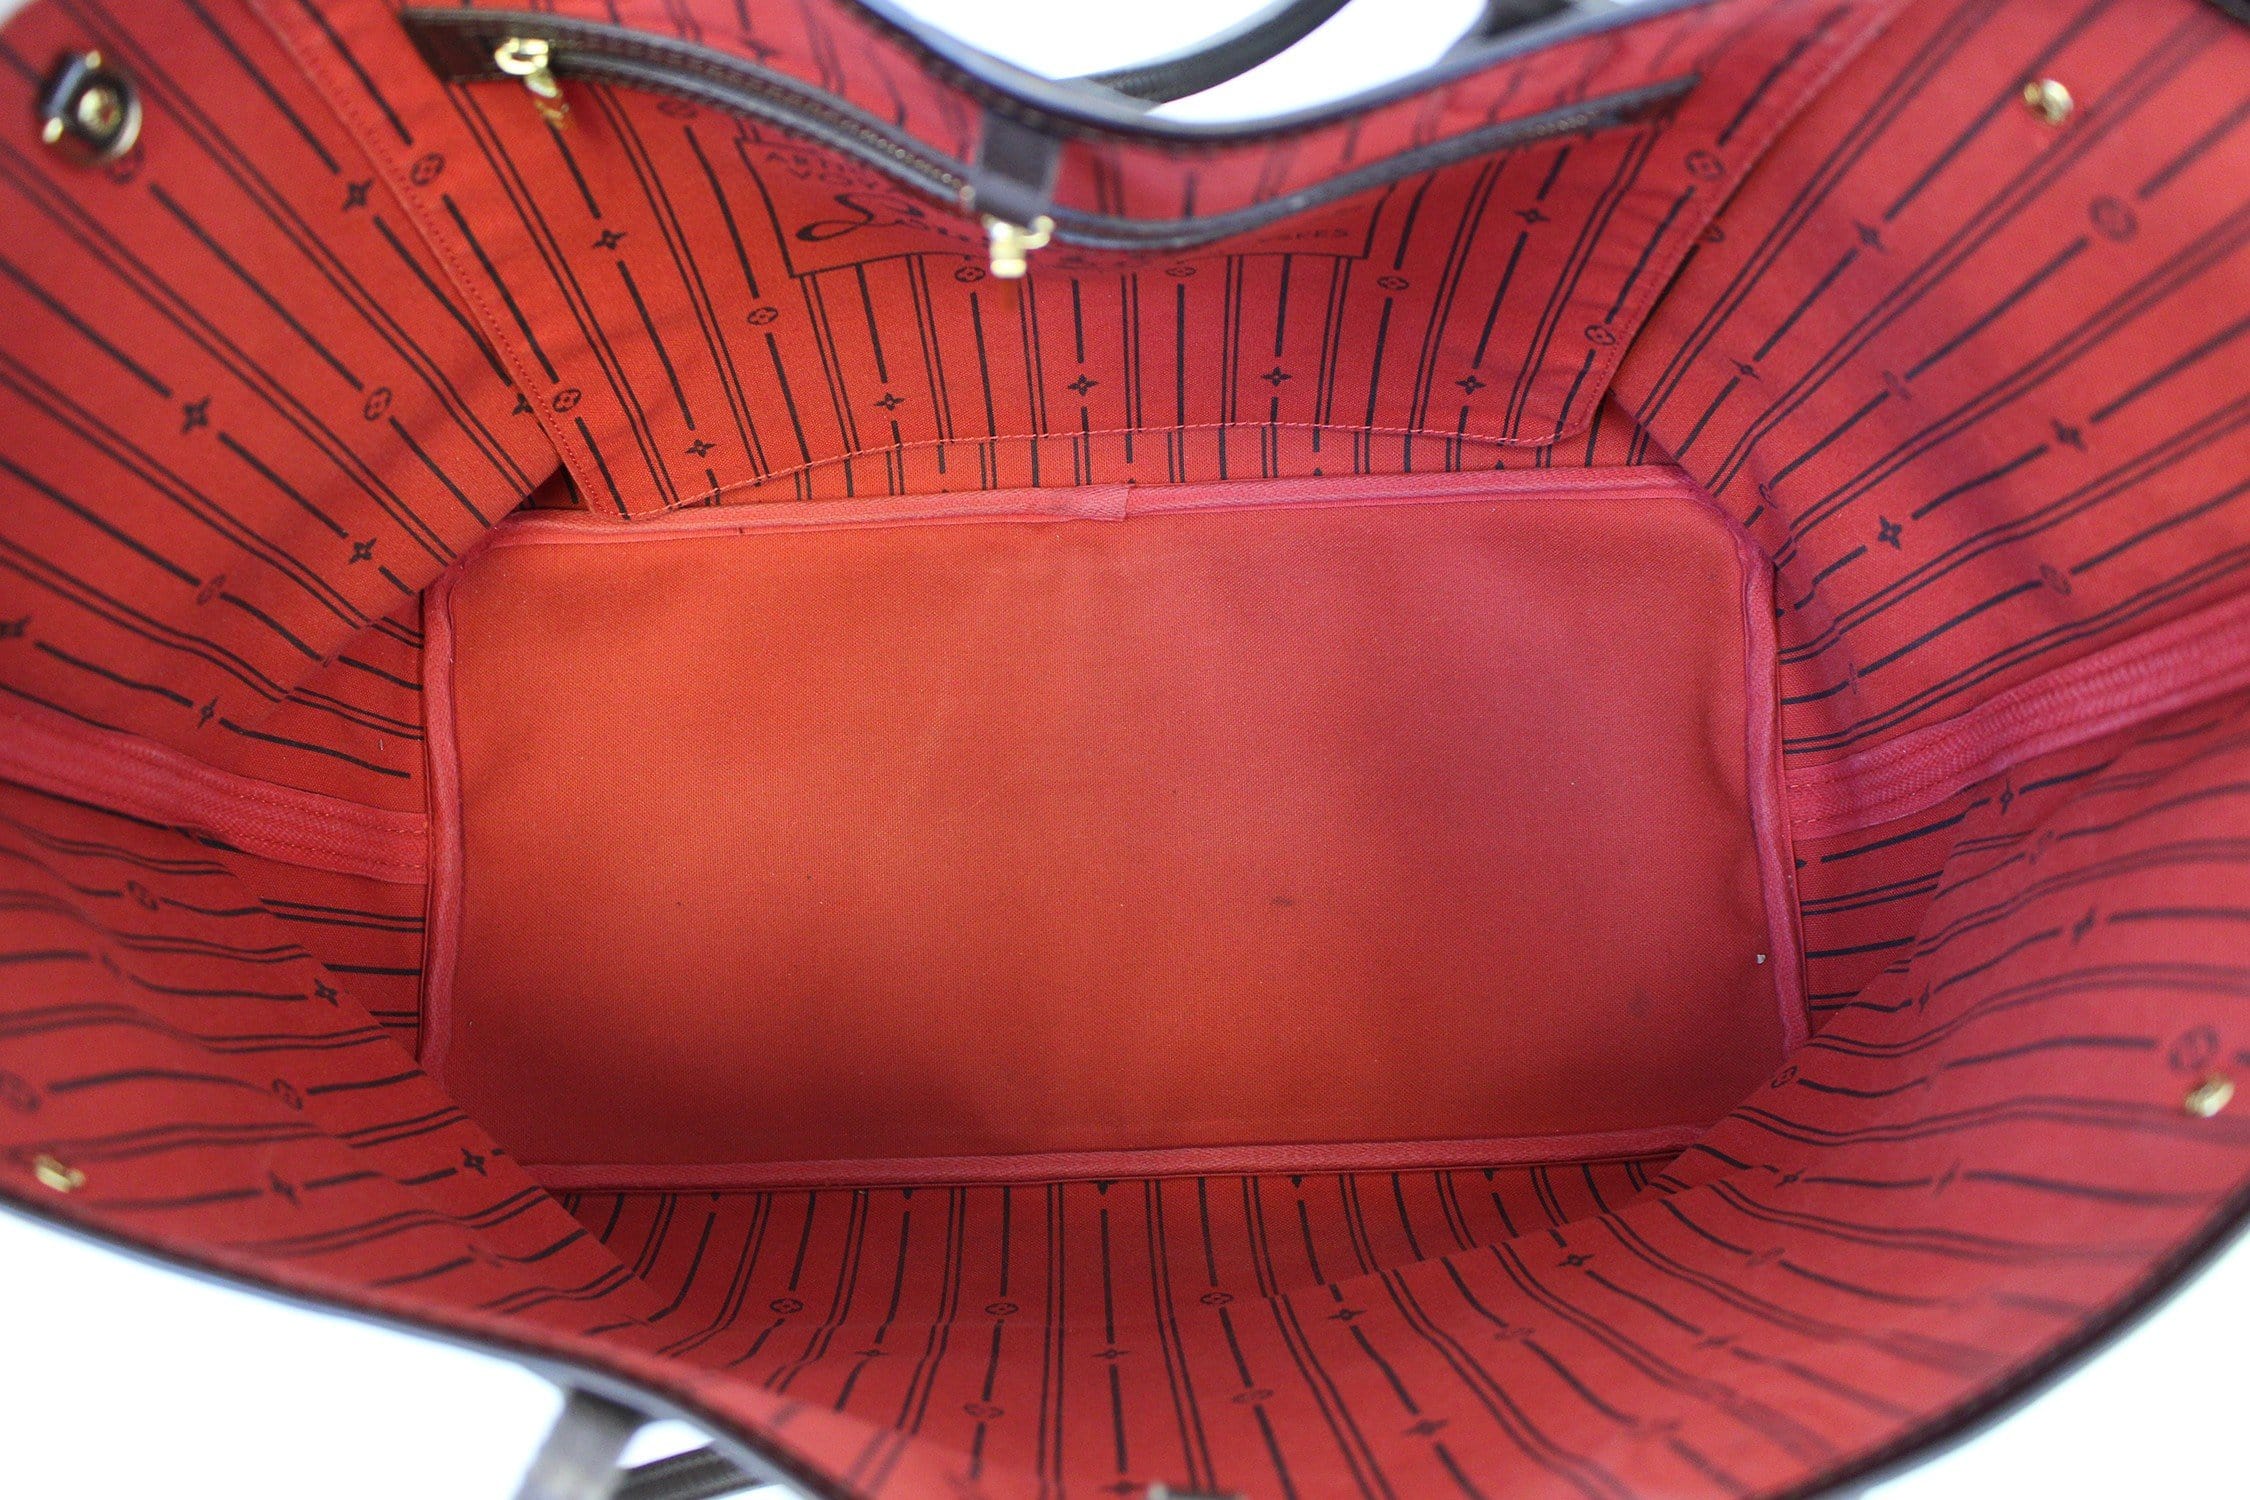 Louis Vuitton Damier Ebene Neverfull GM Tote Bag 83lv33s For Sale